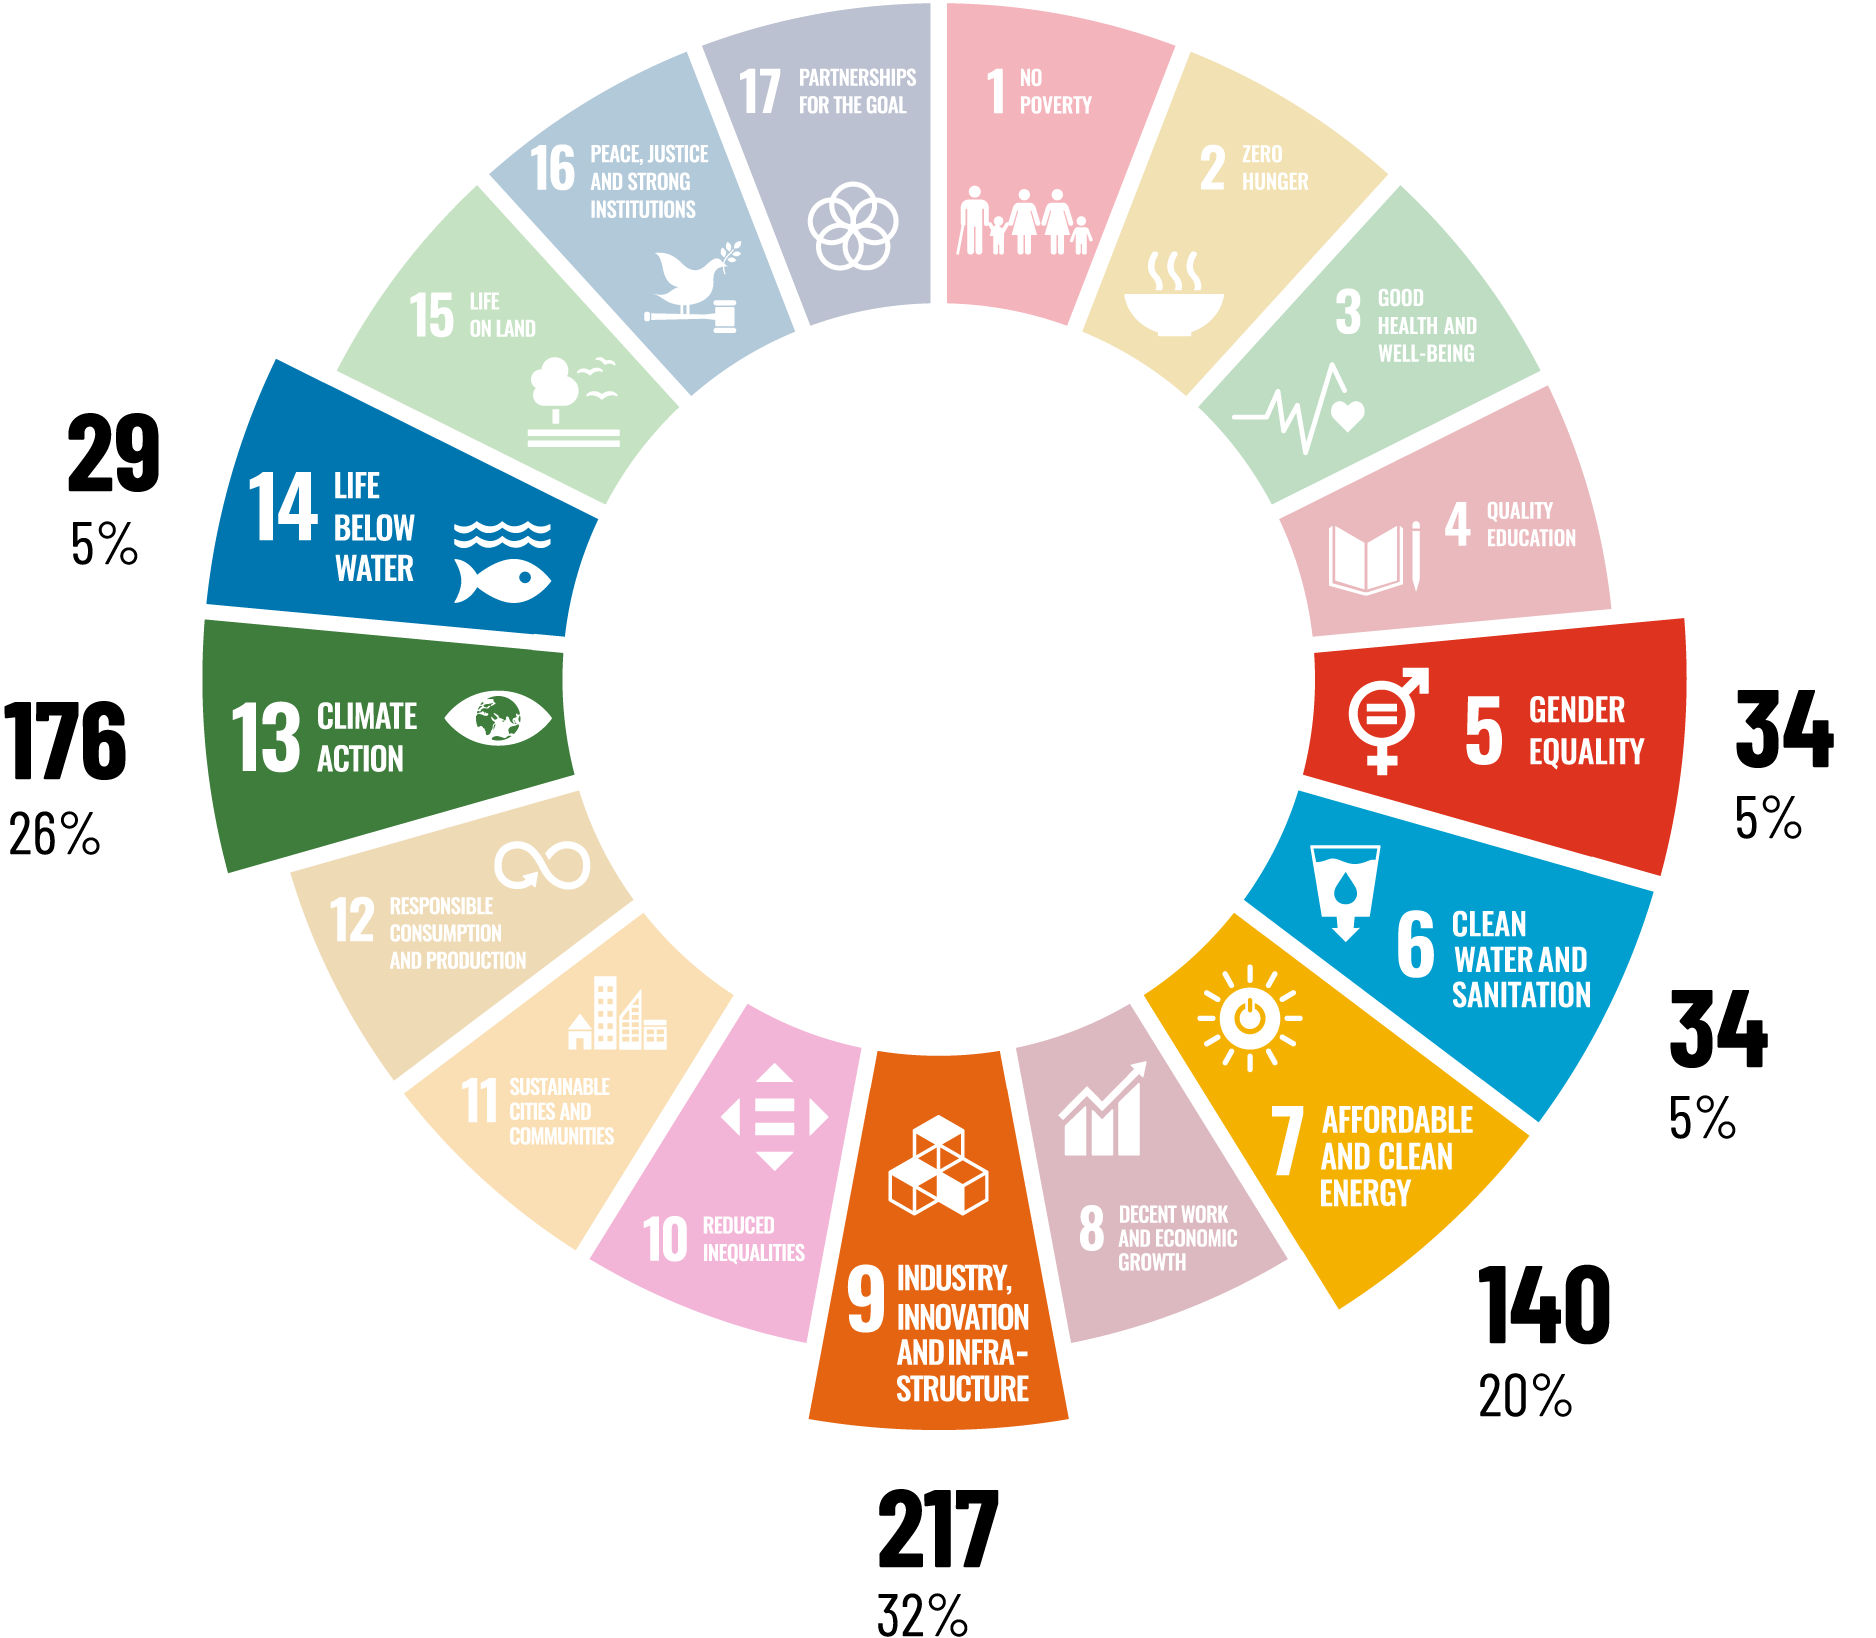 Contribution to UN Sustainable Development Goals